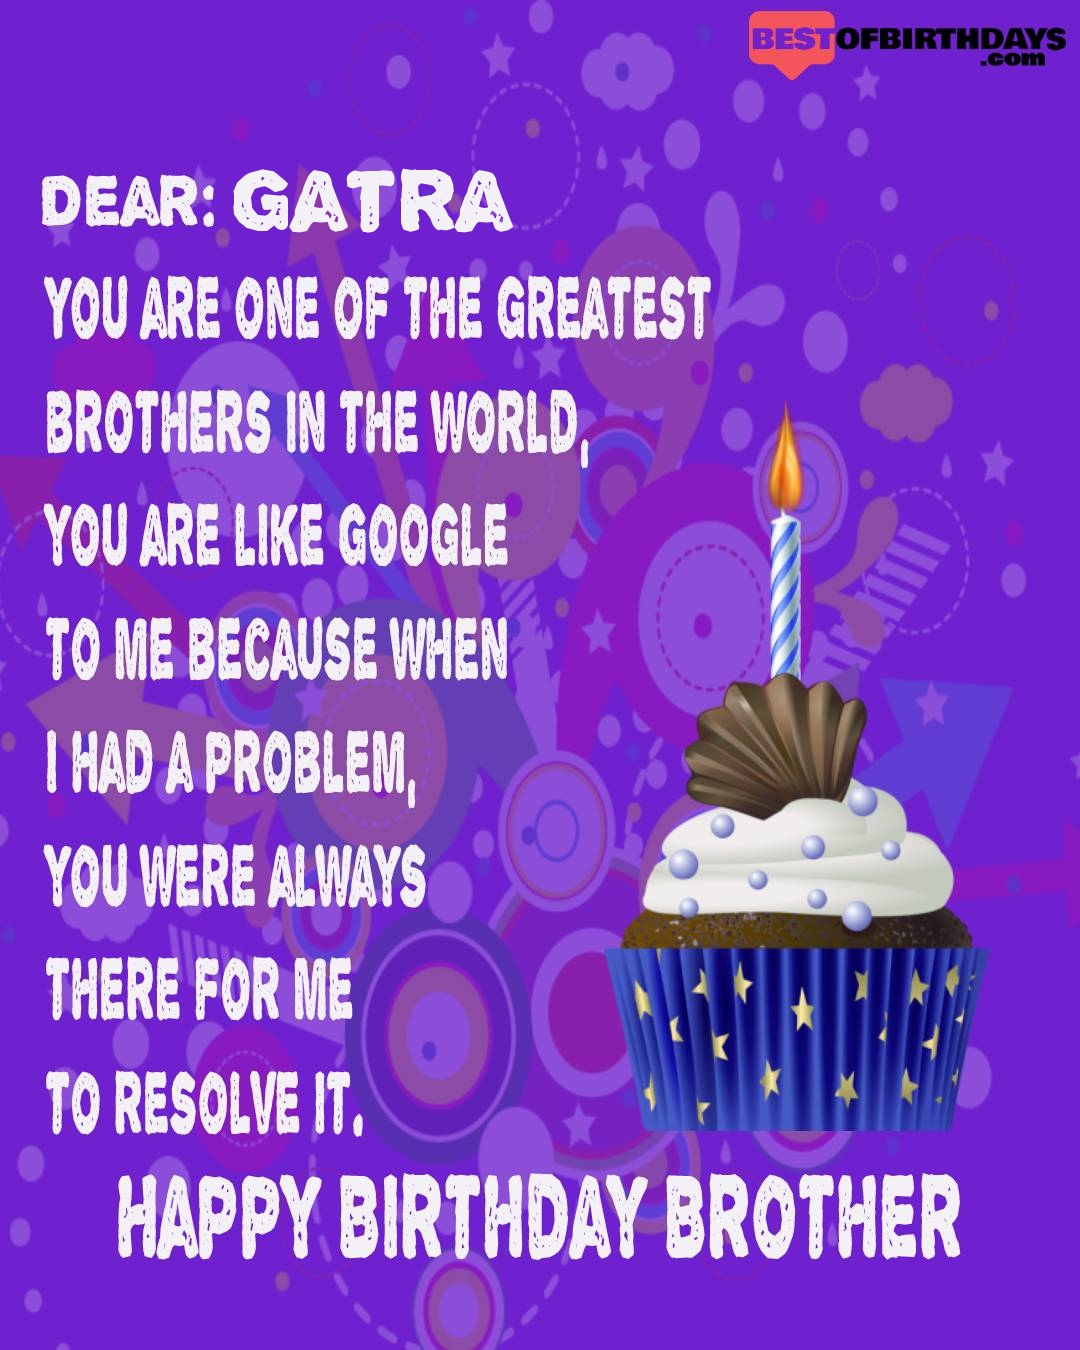 Happy birthday gatra bhai brother bro